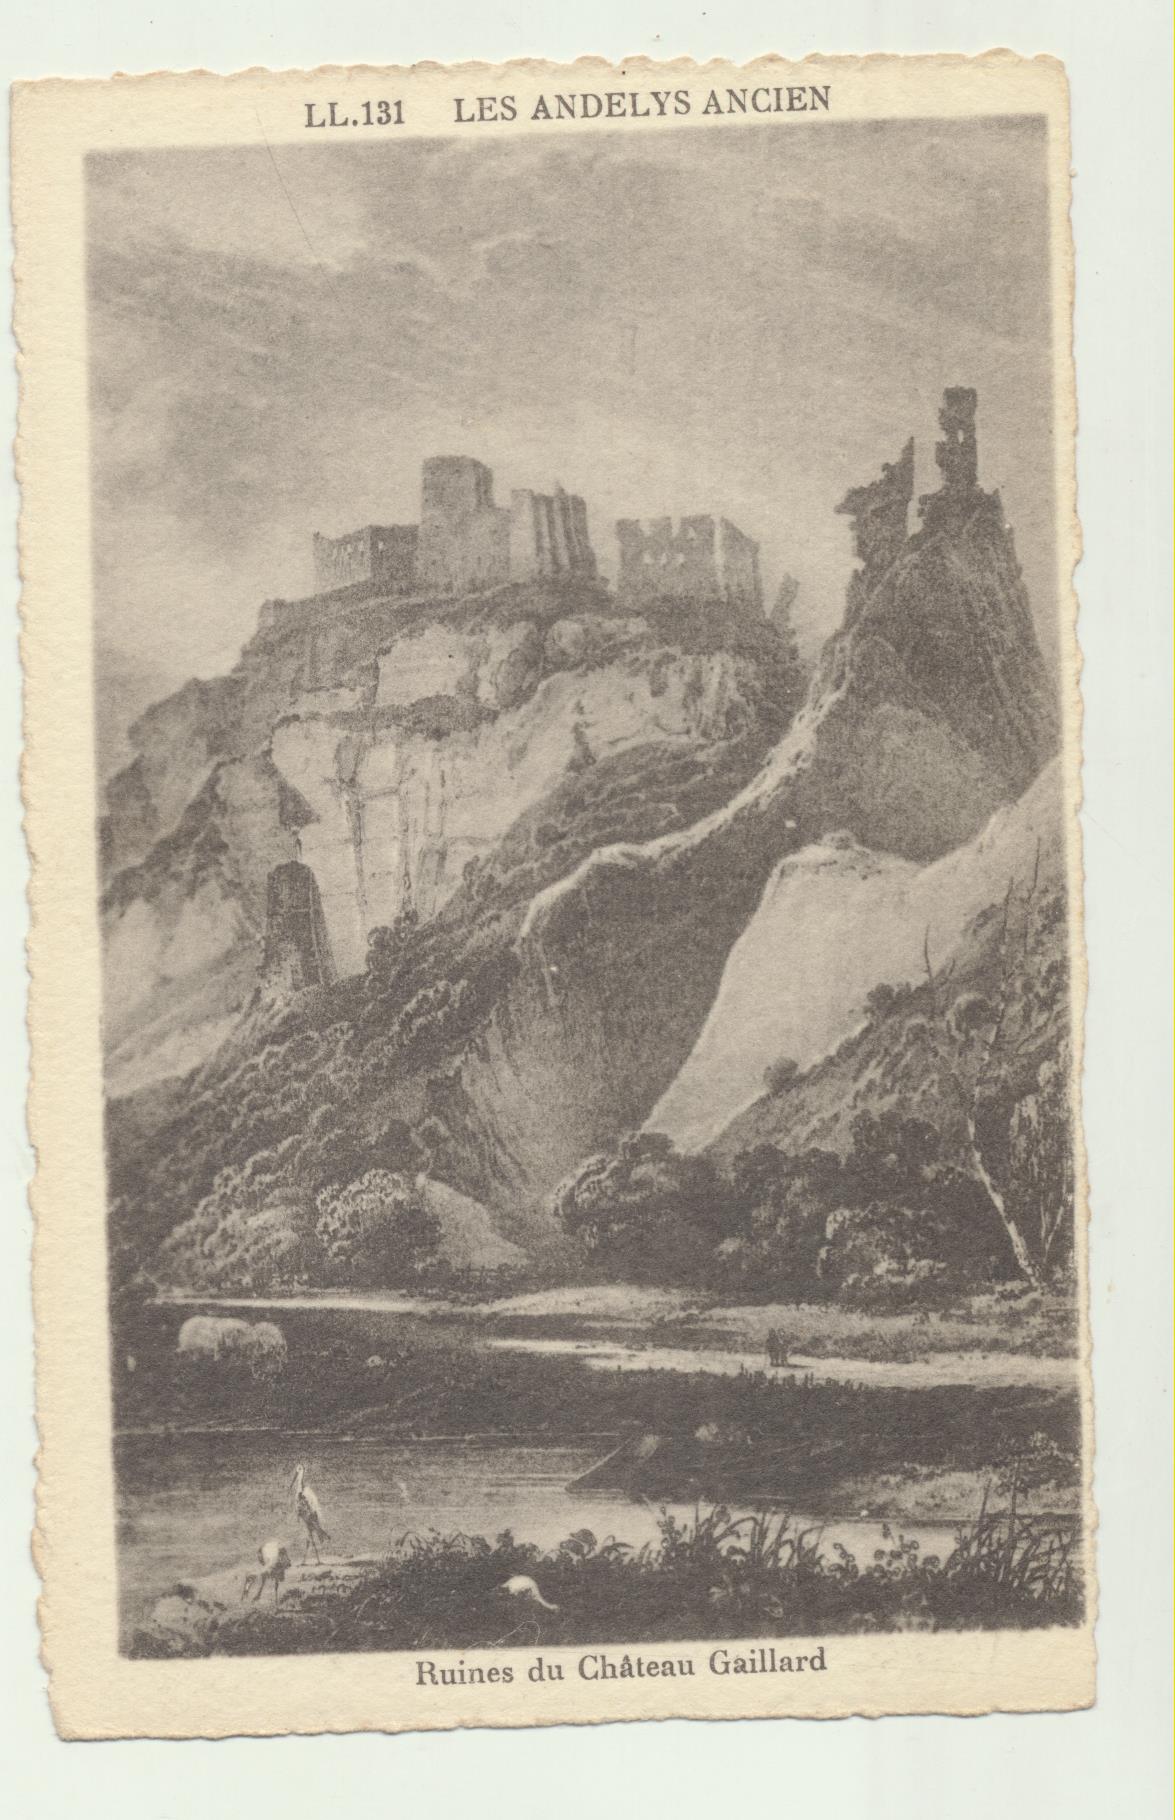 Les Andelyns Ancien. Ruines du Chateau Gaillard